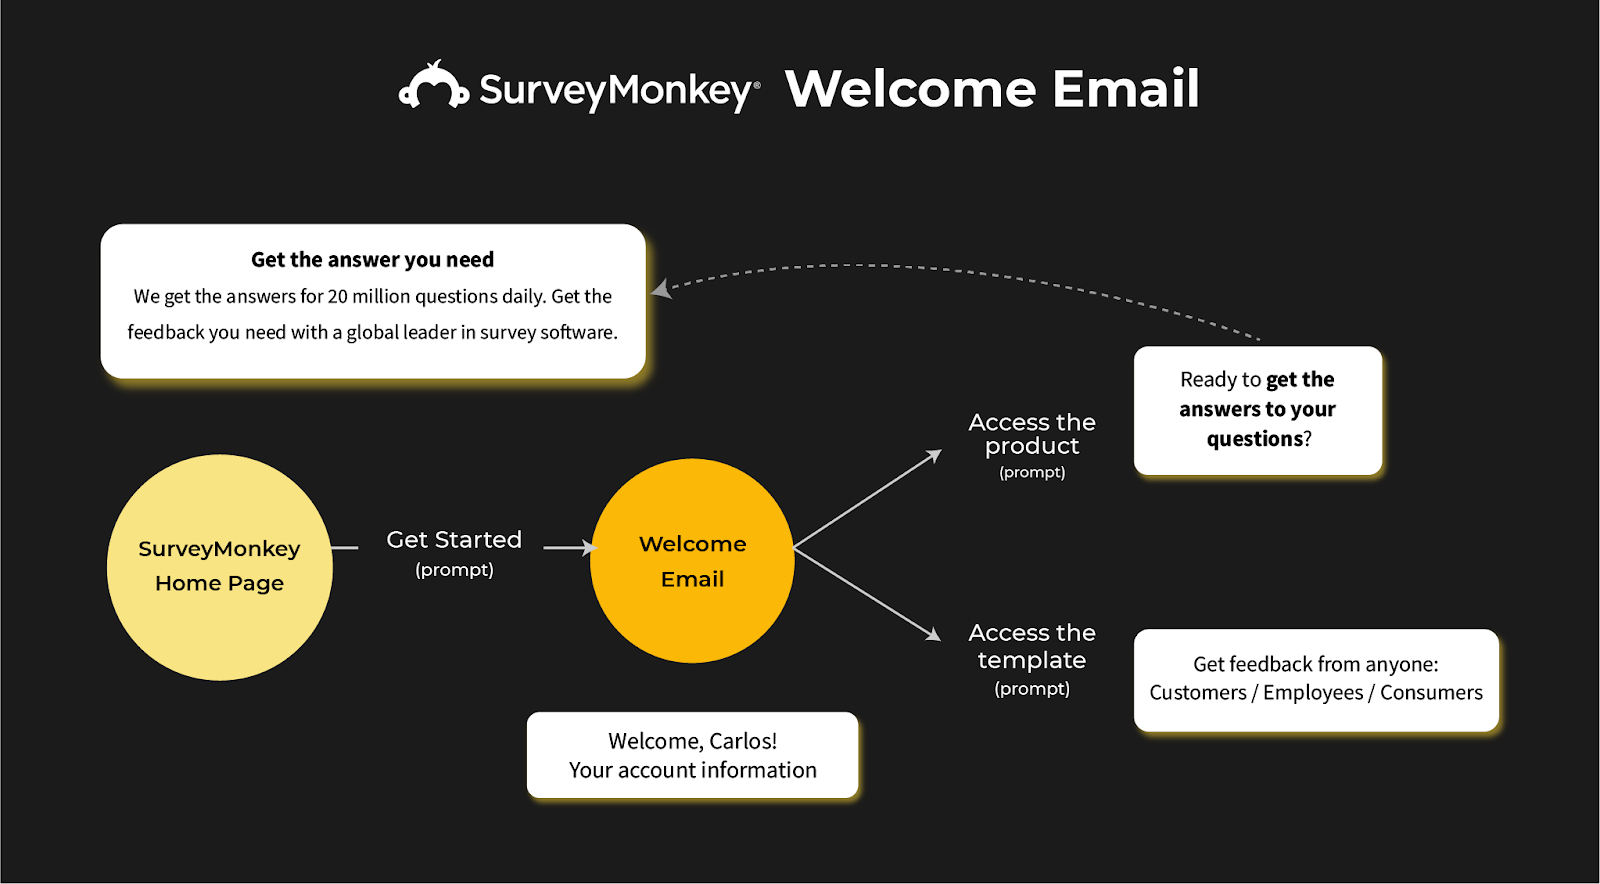 SurveyMonkey Welcome Email